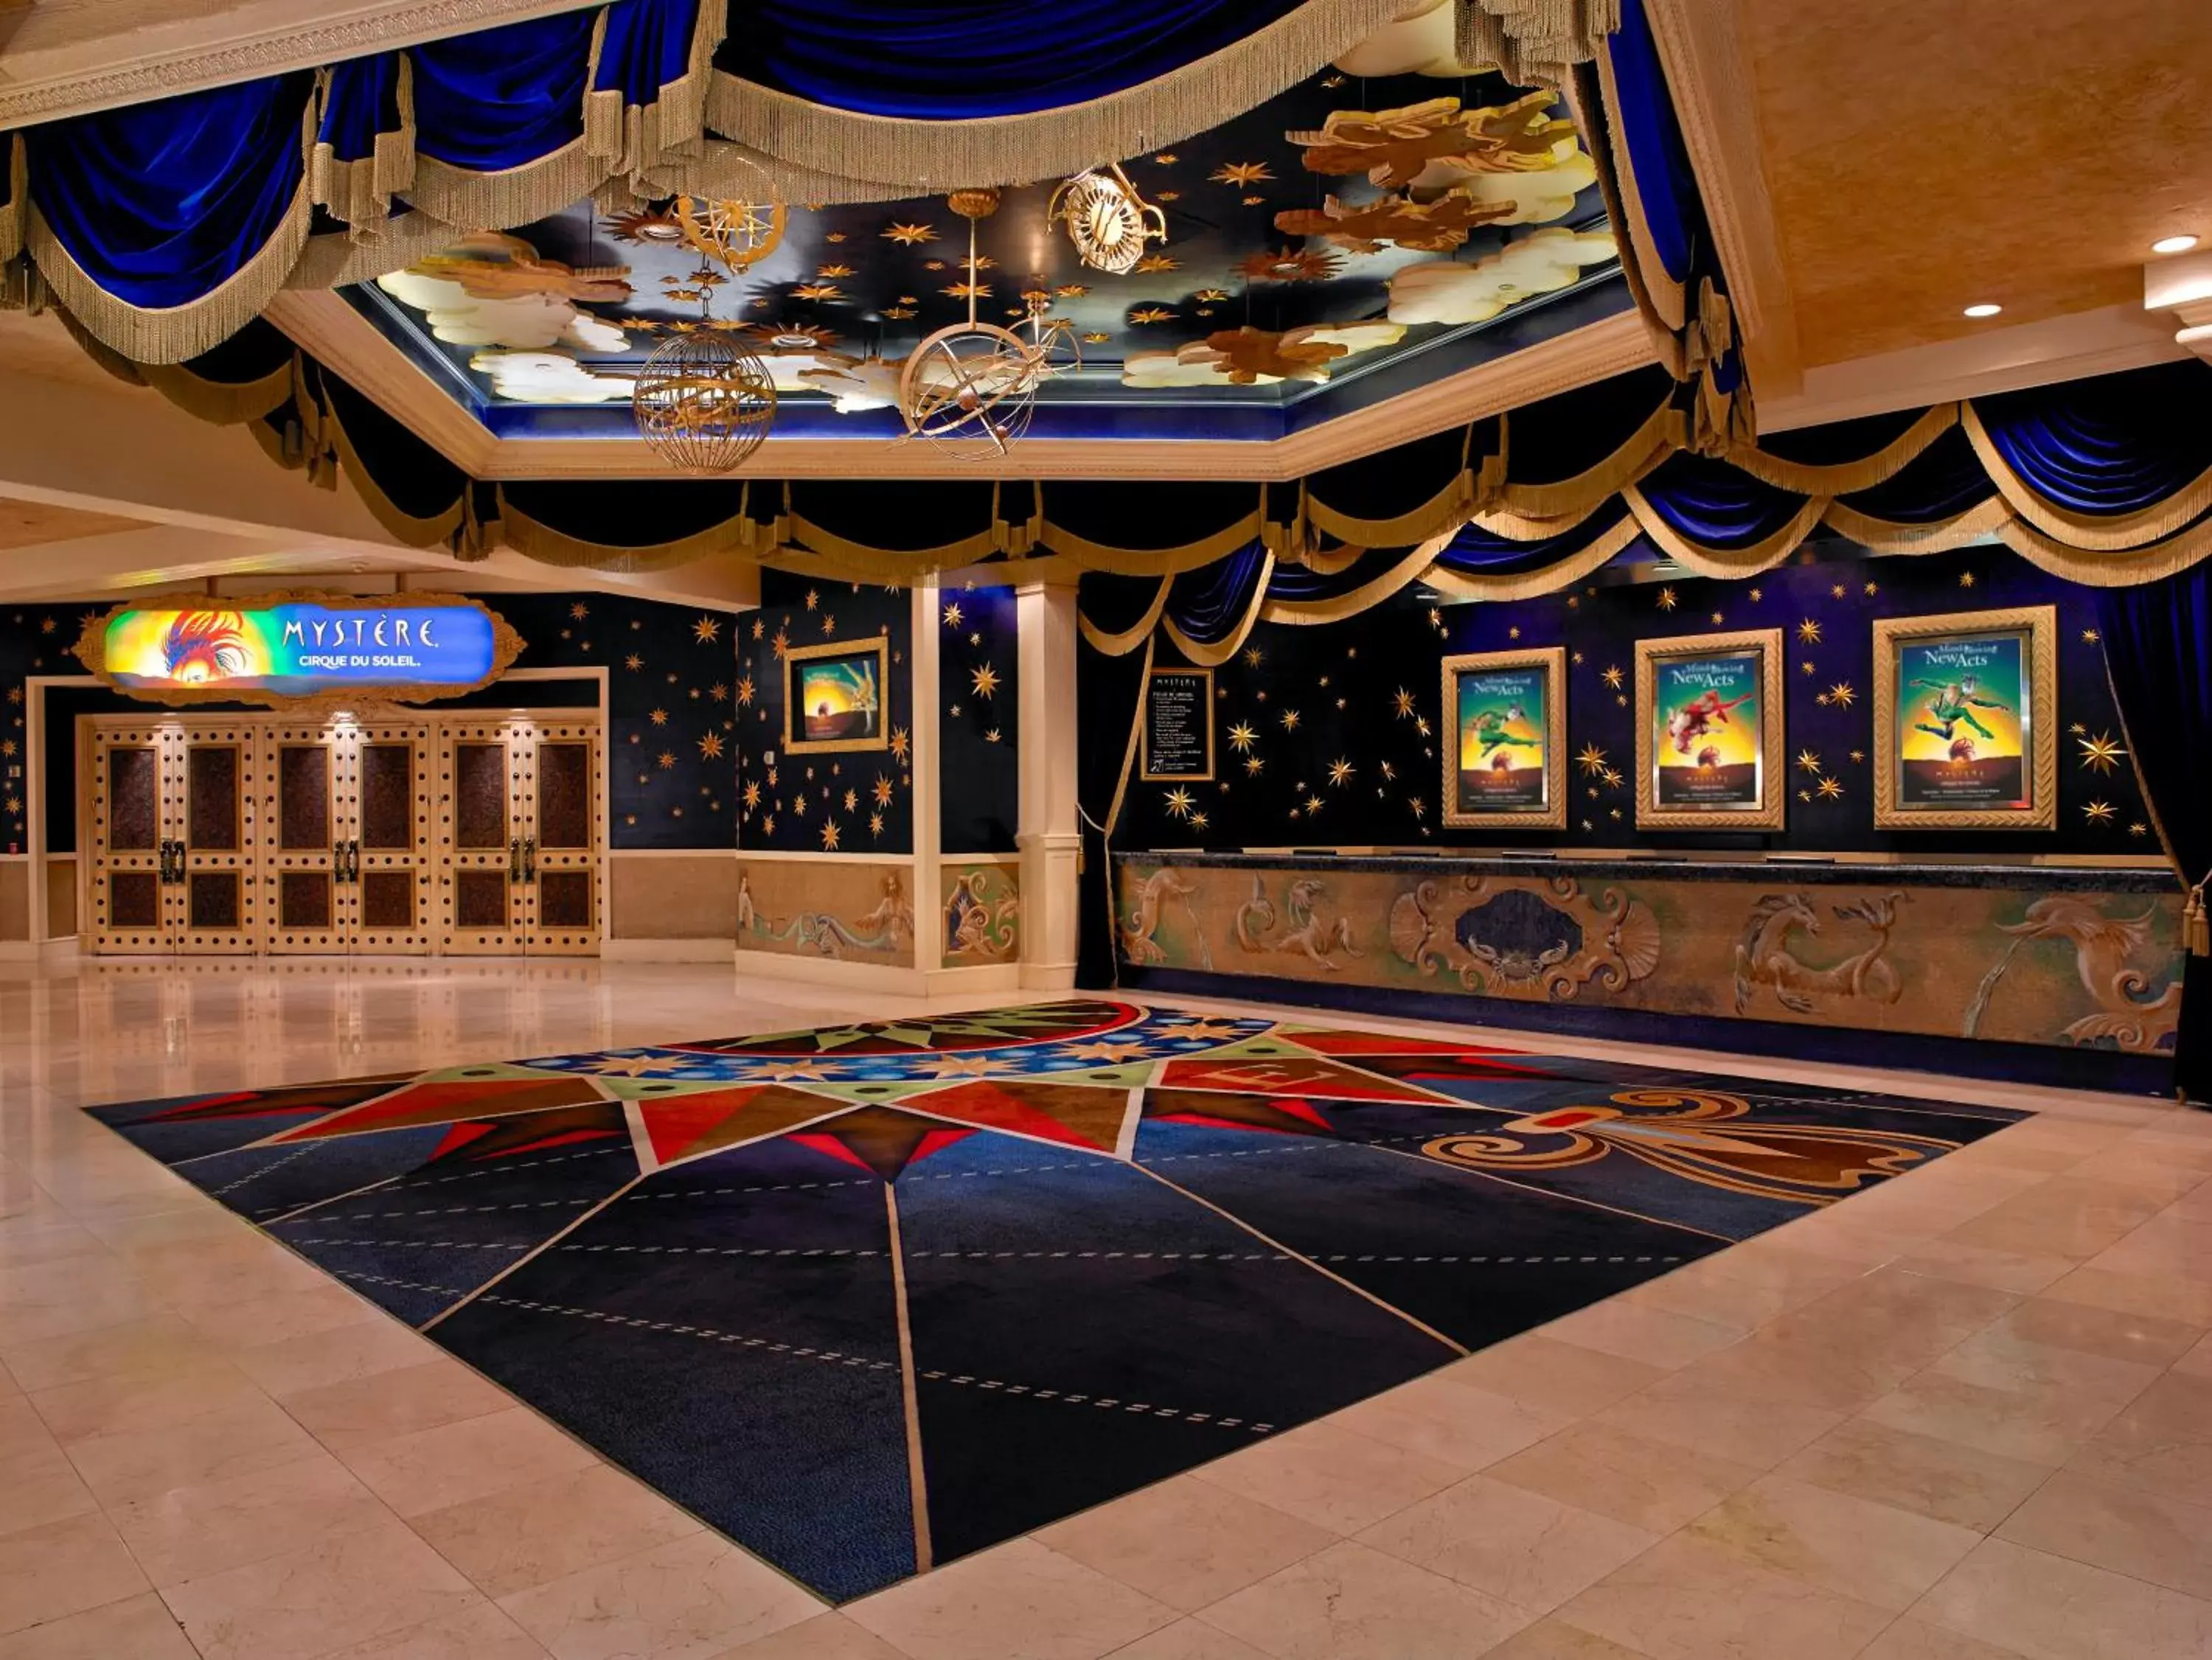 Decorative detail, Other Activities in Treasure Island - TI Las Vegas Hotel & Casino, a Radisson Hotel